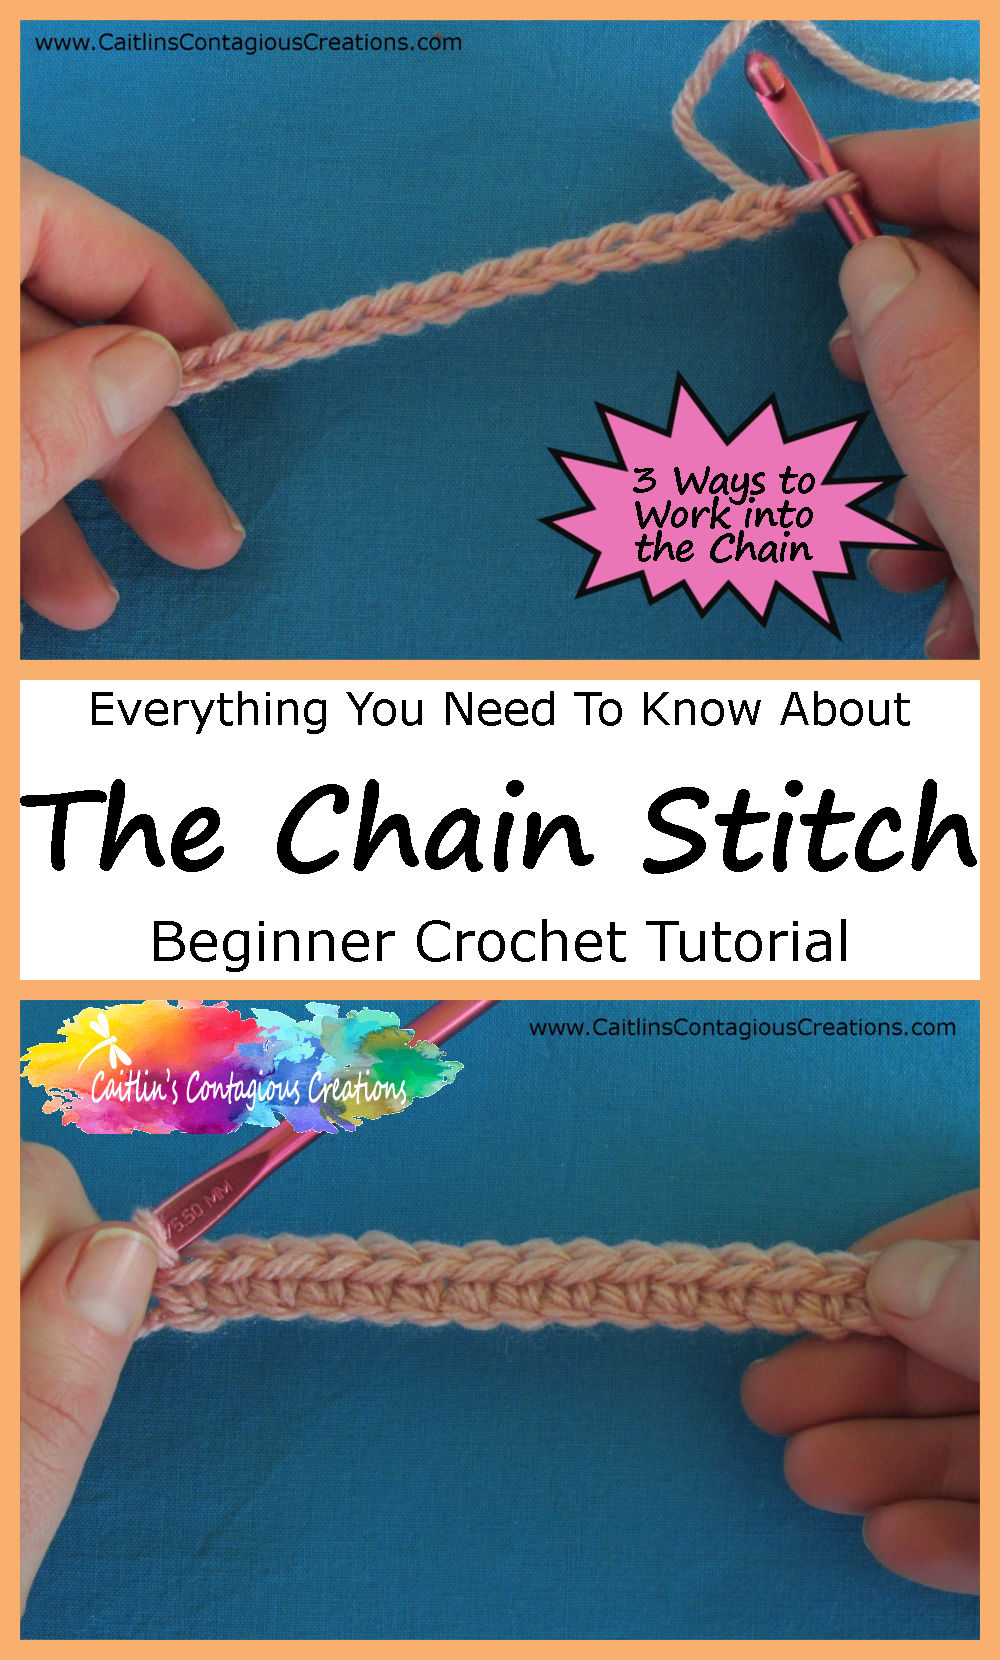 Crochet Chain stitch photos. Text overlay 3 ways to work into a chain crochet basics tutorial